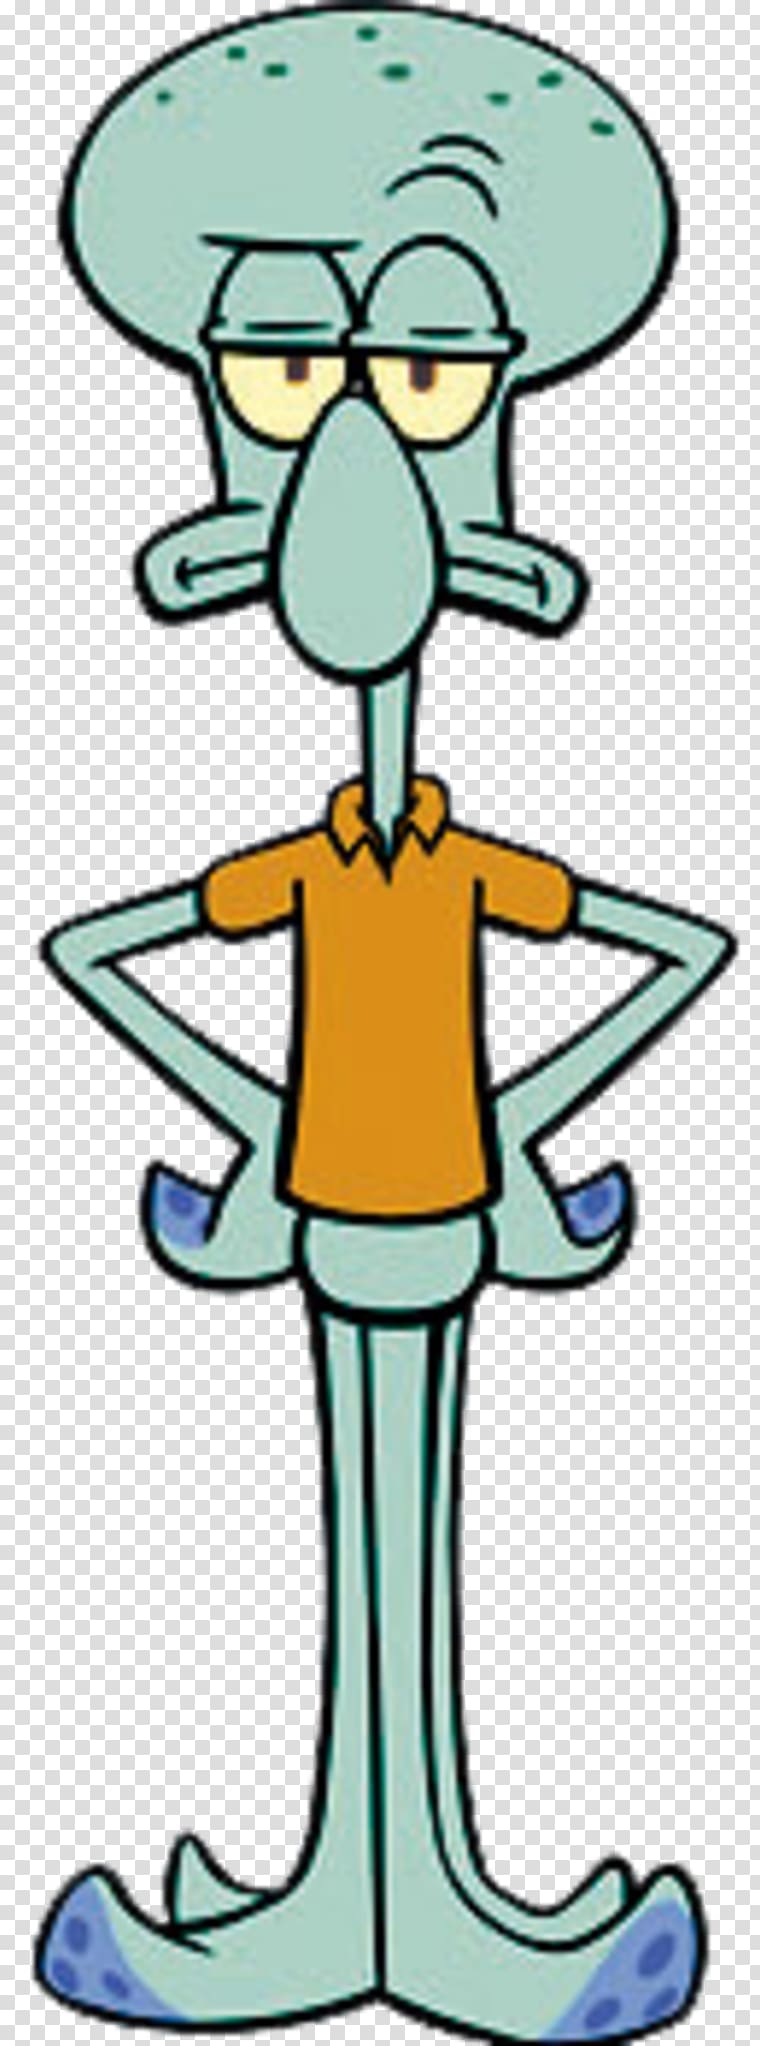 Squidward Tentacles Patrick Star Sandy Cheeks Mr. Krabs Plankton and Karen, sand monster transparent background PNG clipart